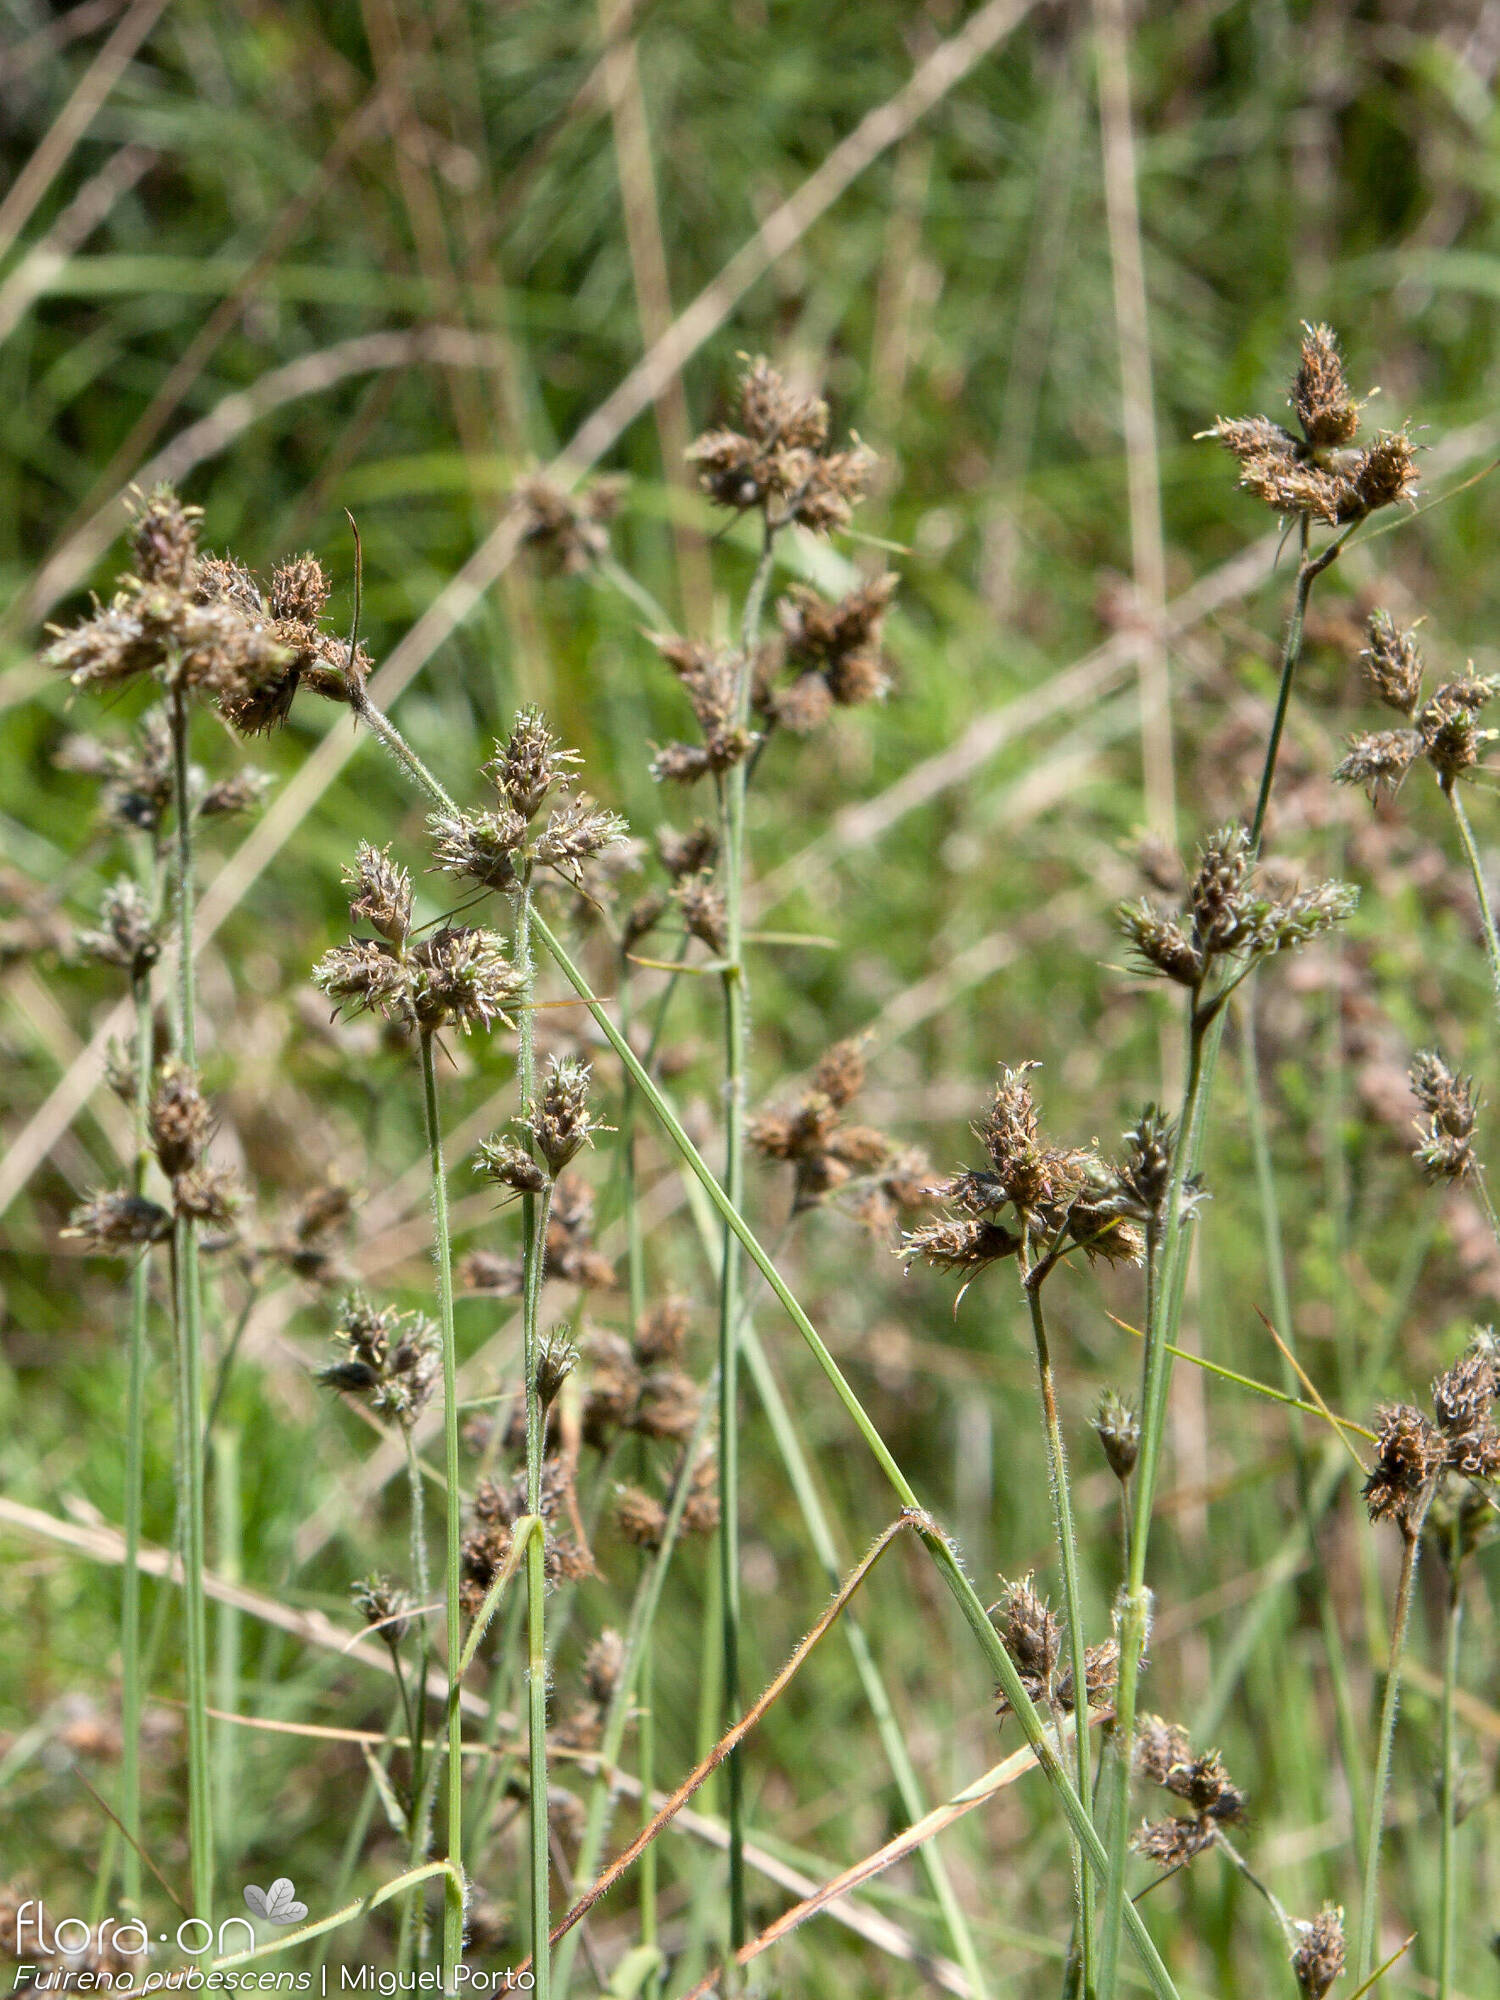 Fuirena pubescens - Hábito | Miguel Porto; CC BY-NC 4.0